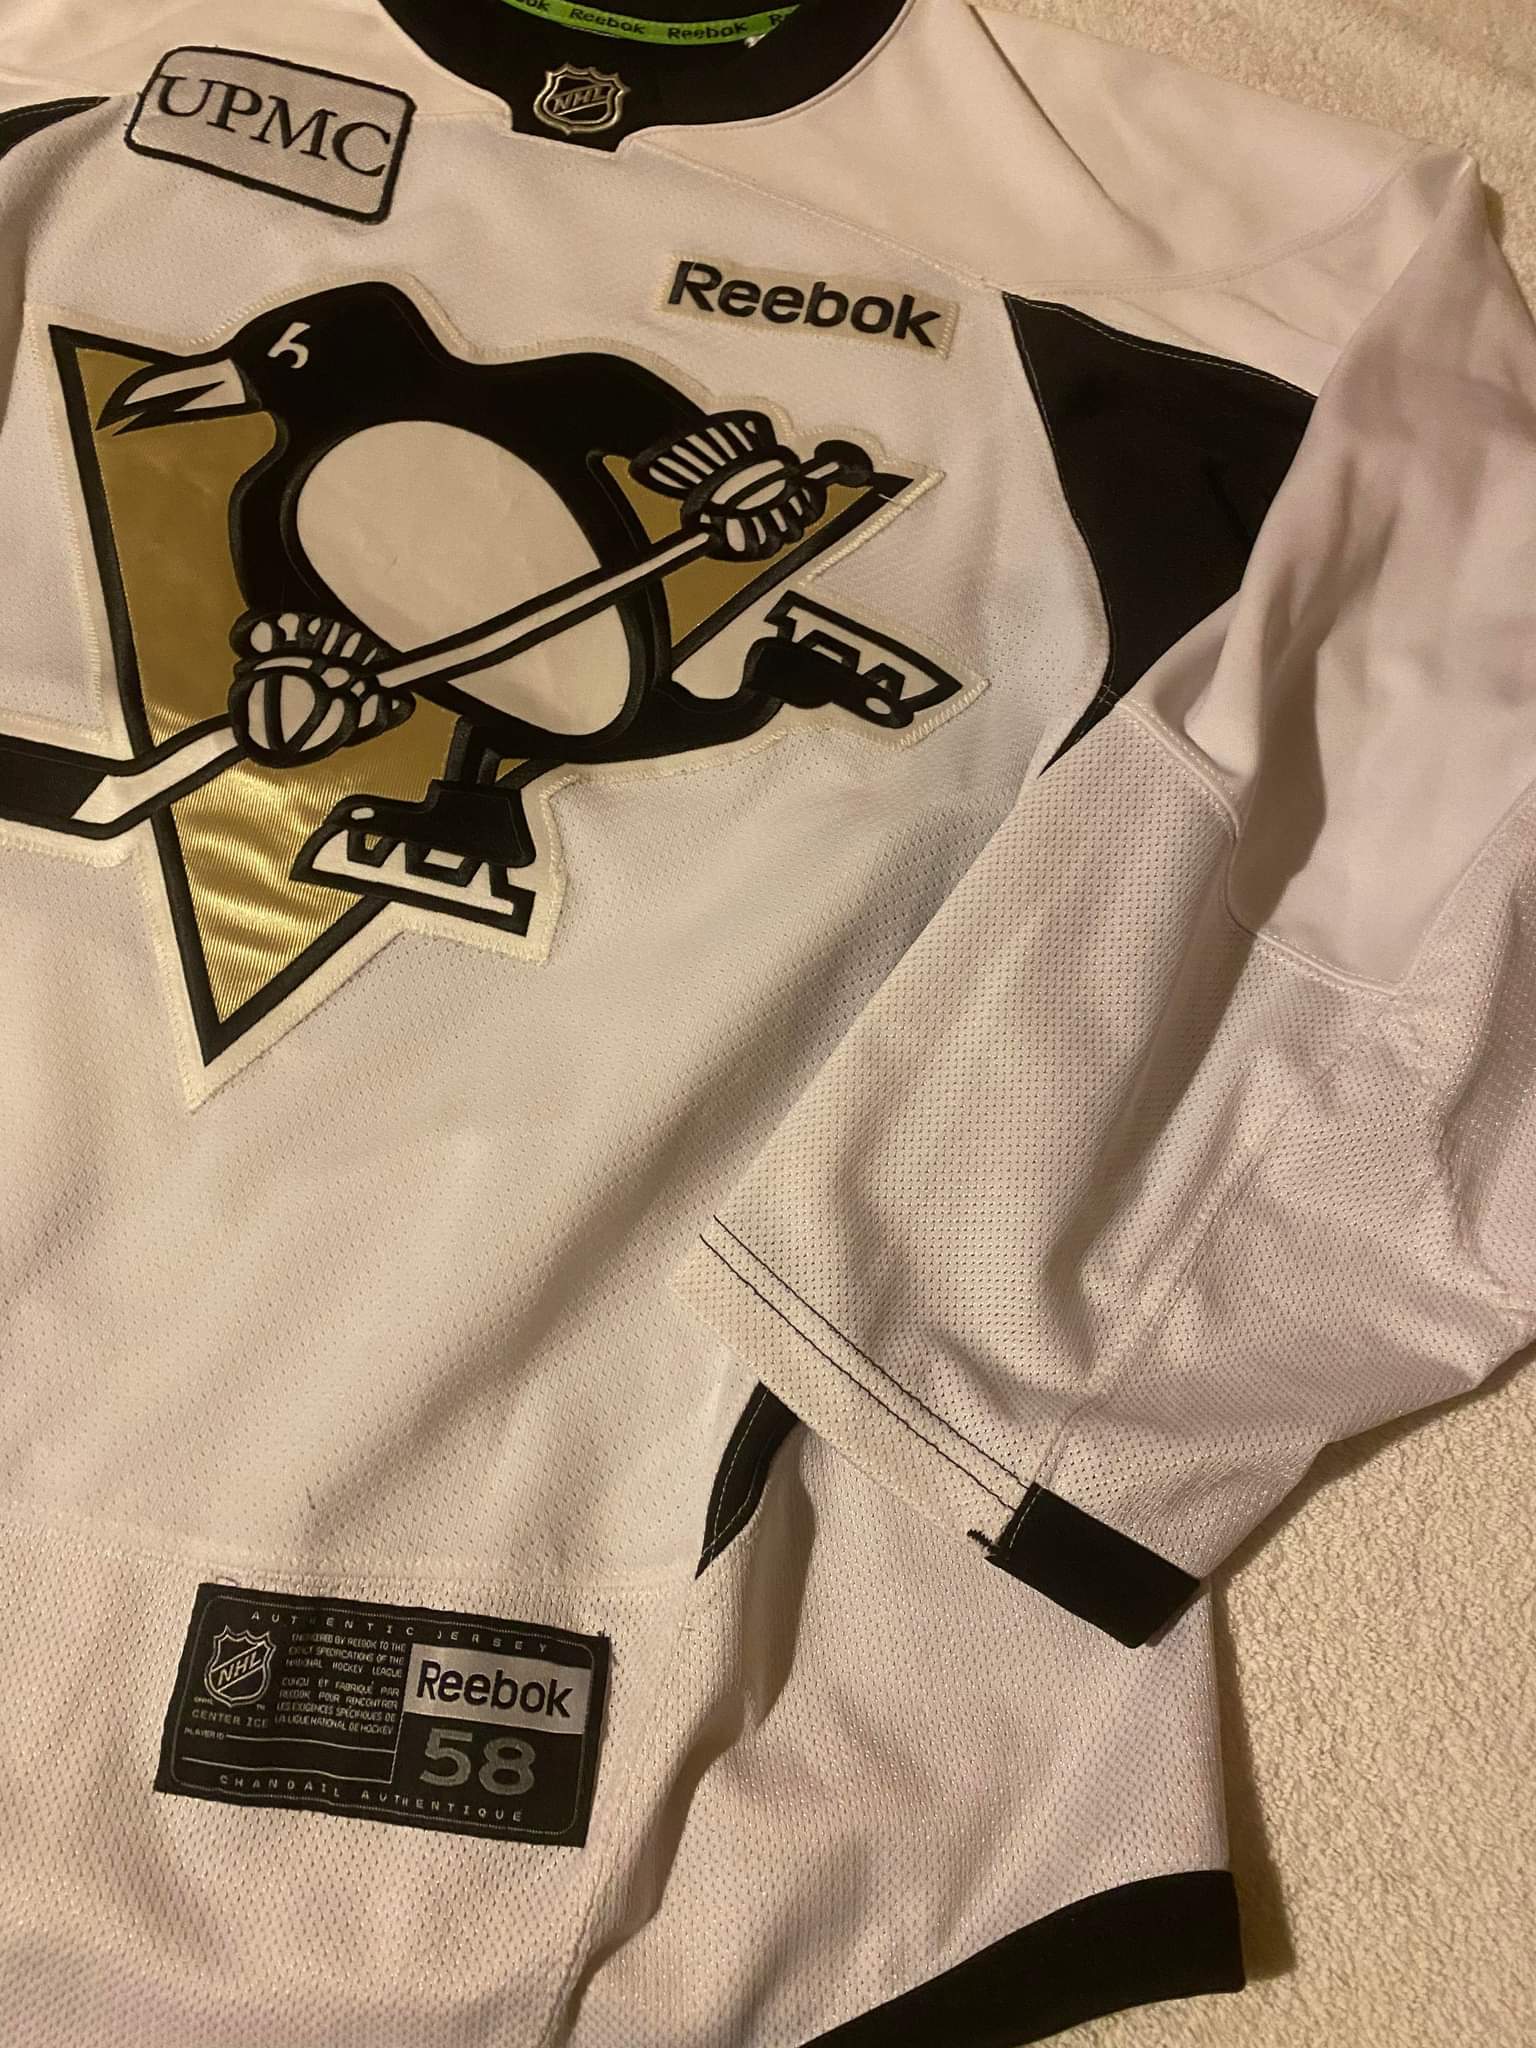 Pittsburgh Penguins Reebok NHL Stadium Series Youth Replica Jersey